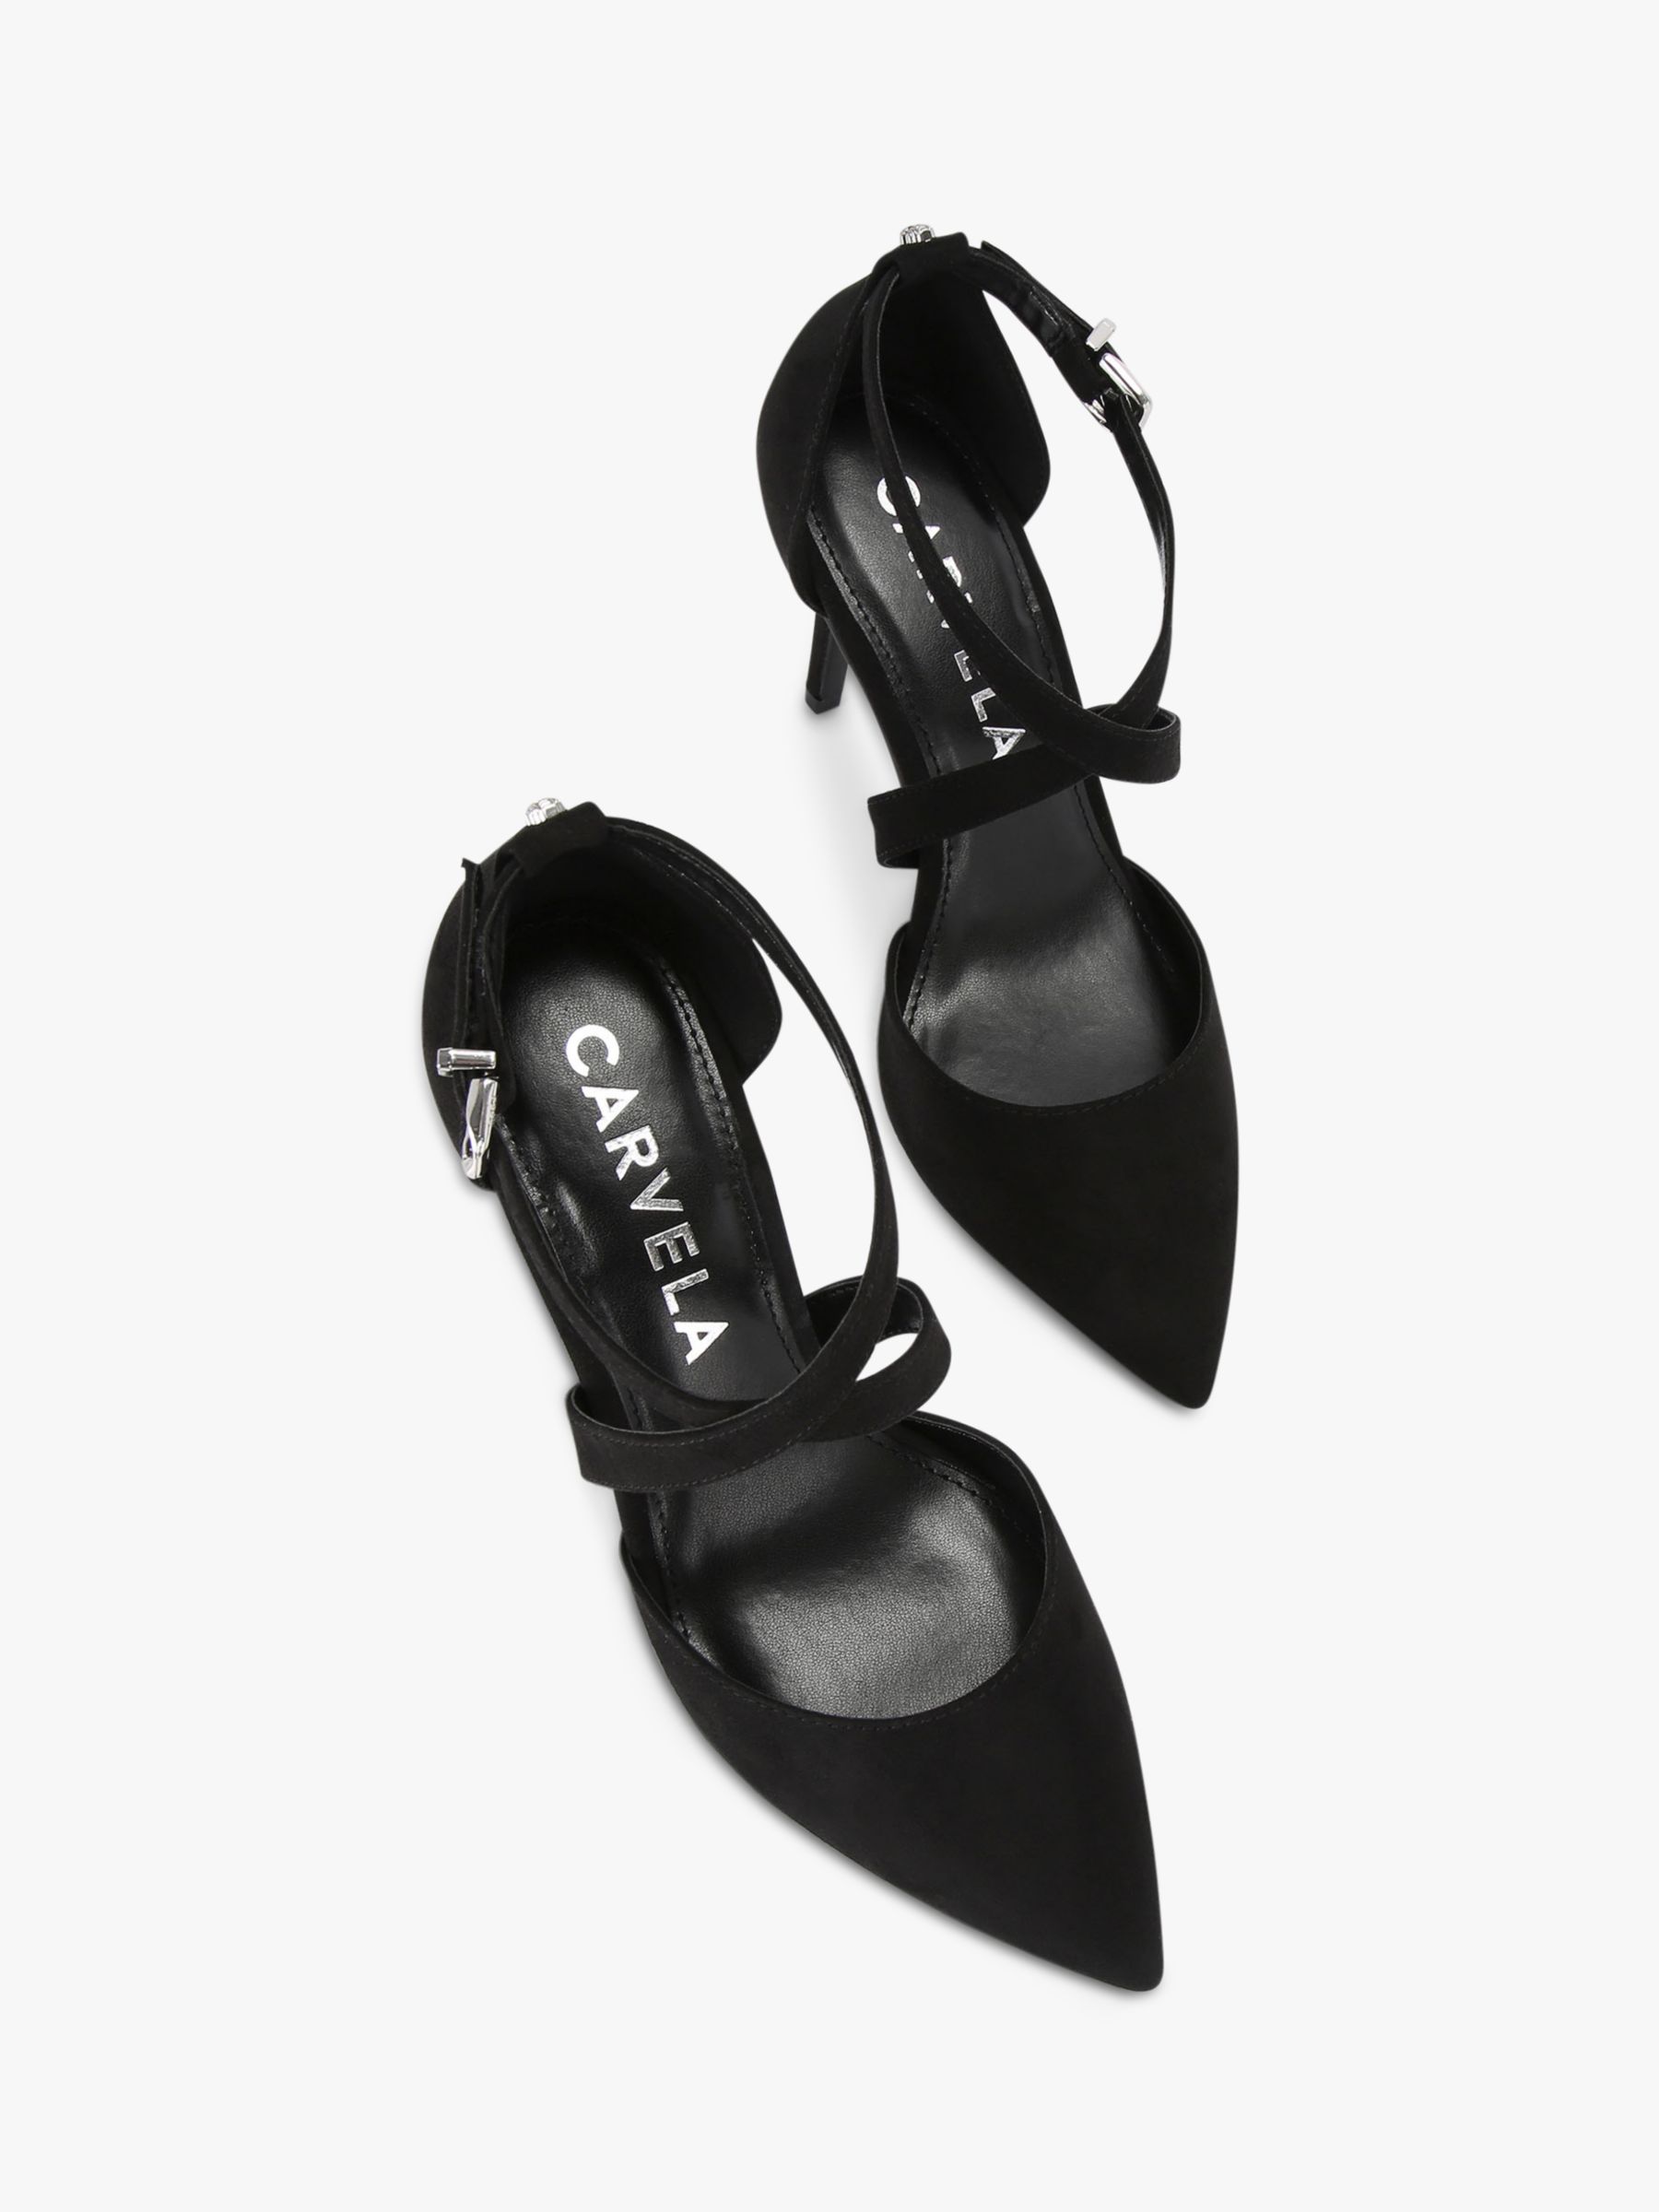 Carvela Kross Court Shoes, Black at John Lewis & Partners